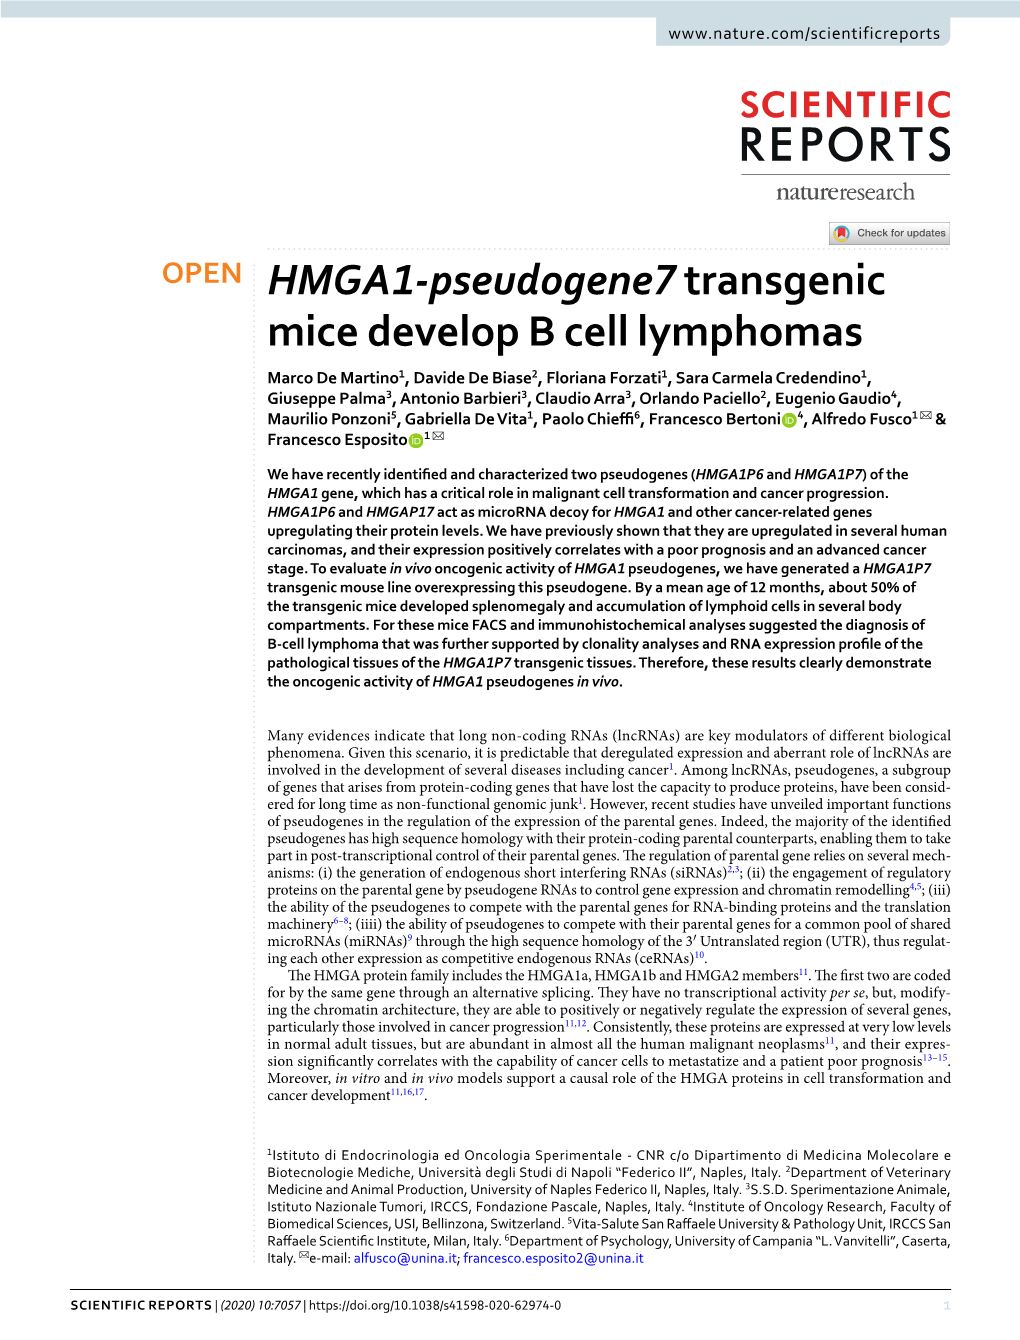 HMGA1-Pseudogene7 Transgenic Mice Develop B Cell Lymphomas